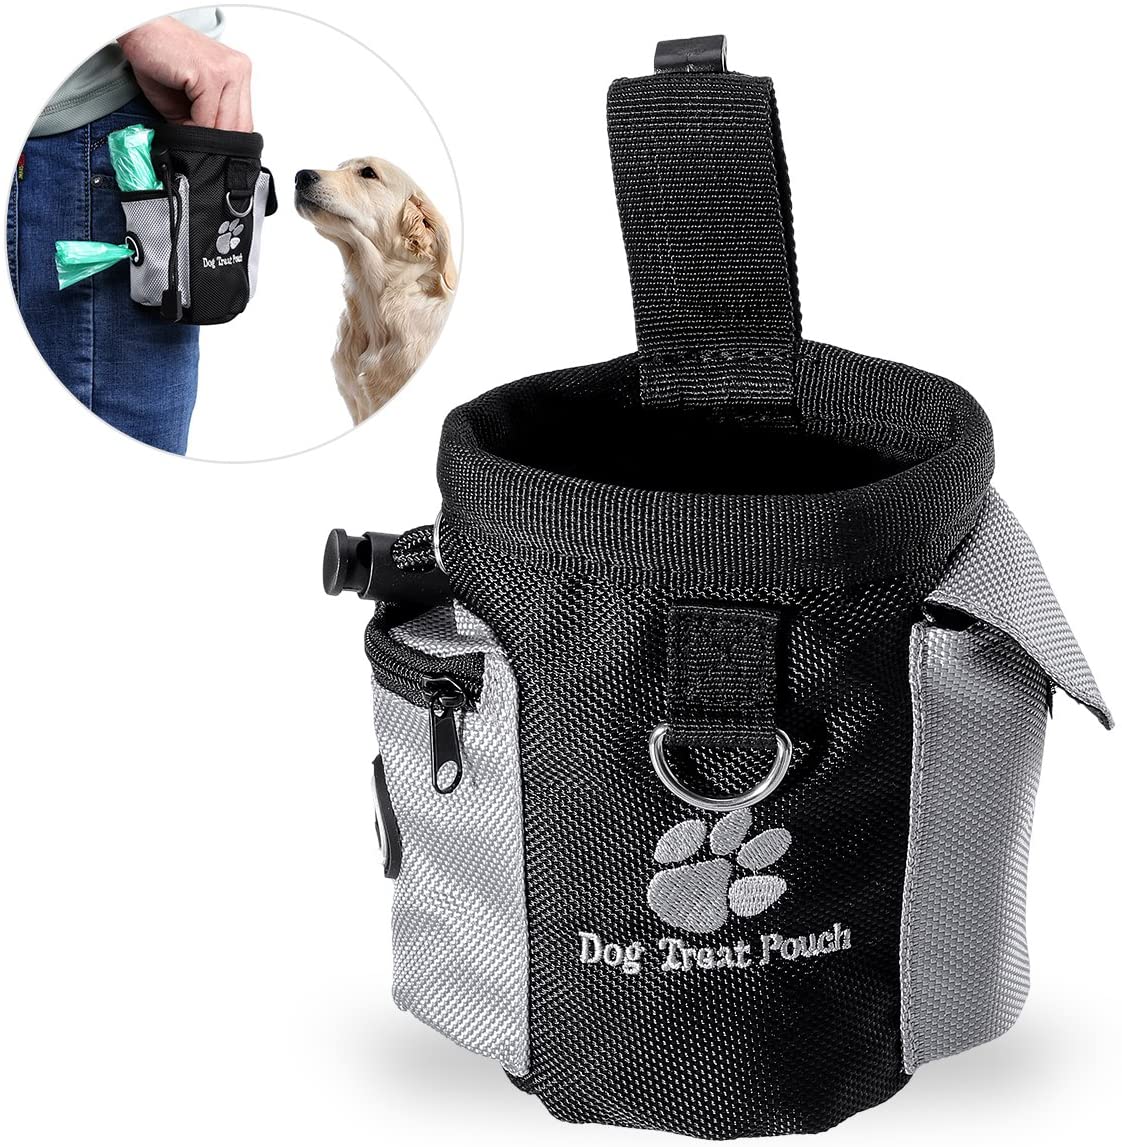  UEETEK Perro tratamiento de cintura bolsa bolso manos libre mascota perro entrenamiento alimentos bolsa de cintura con dispensador de bolsa caca incorporada 